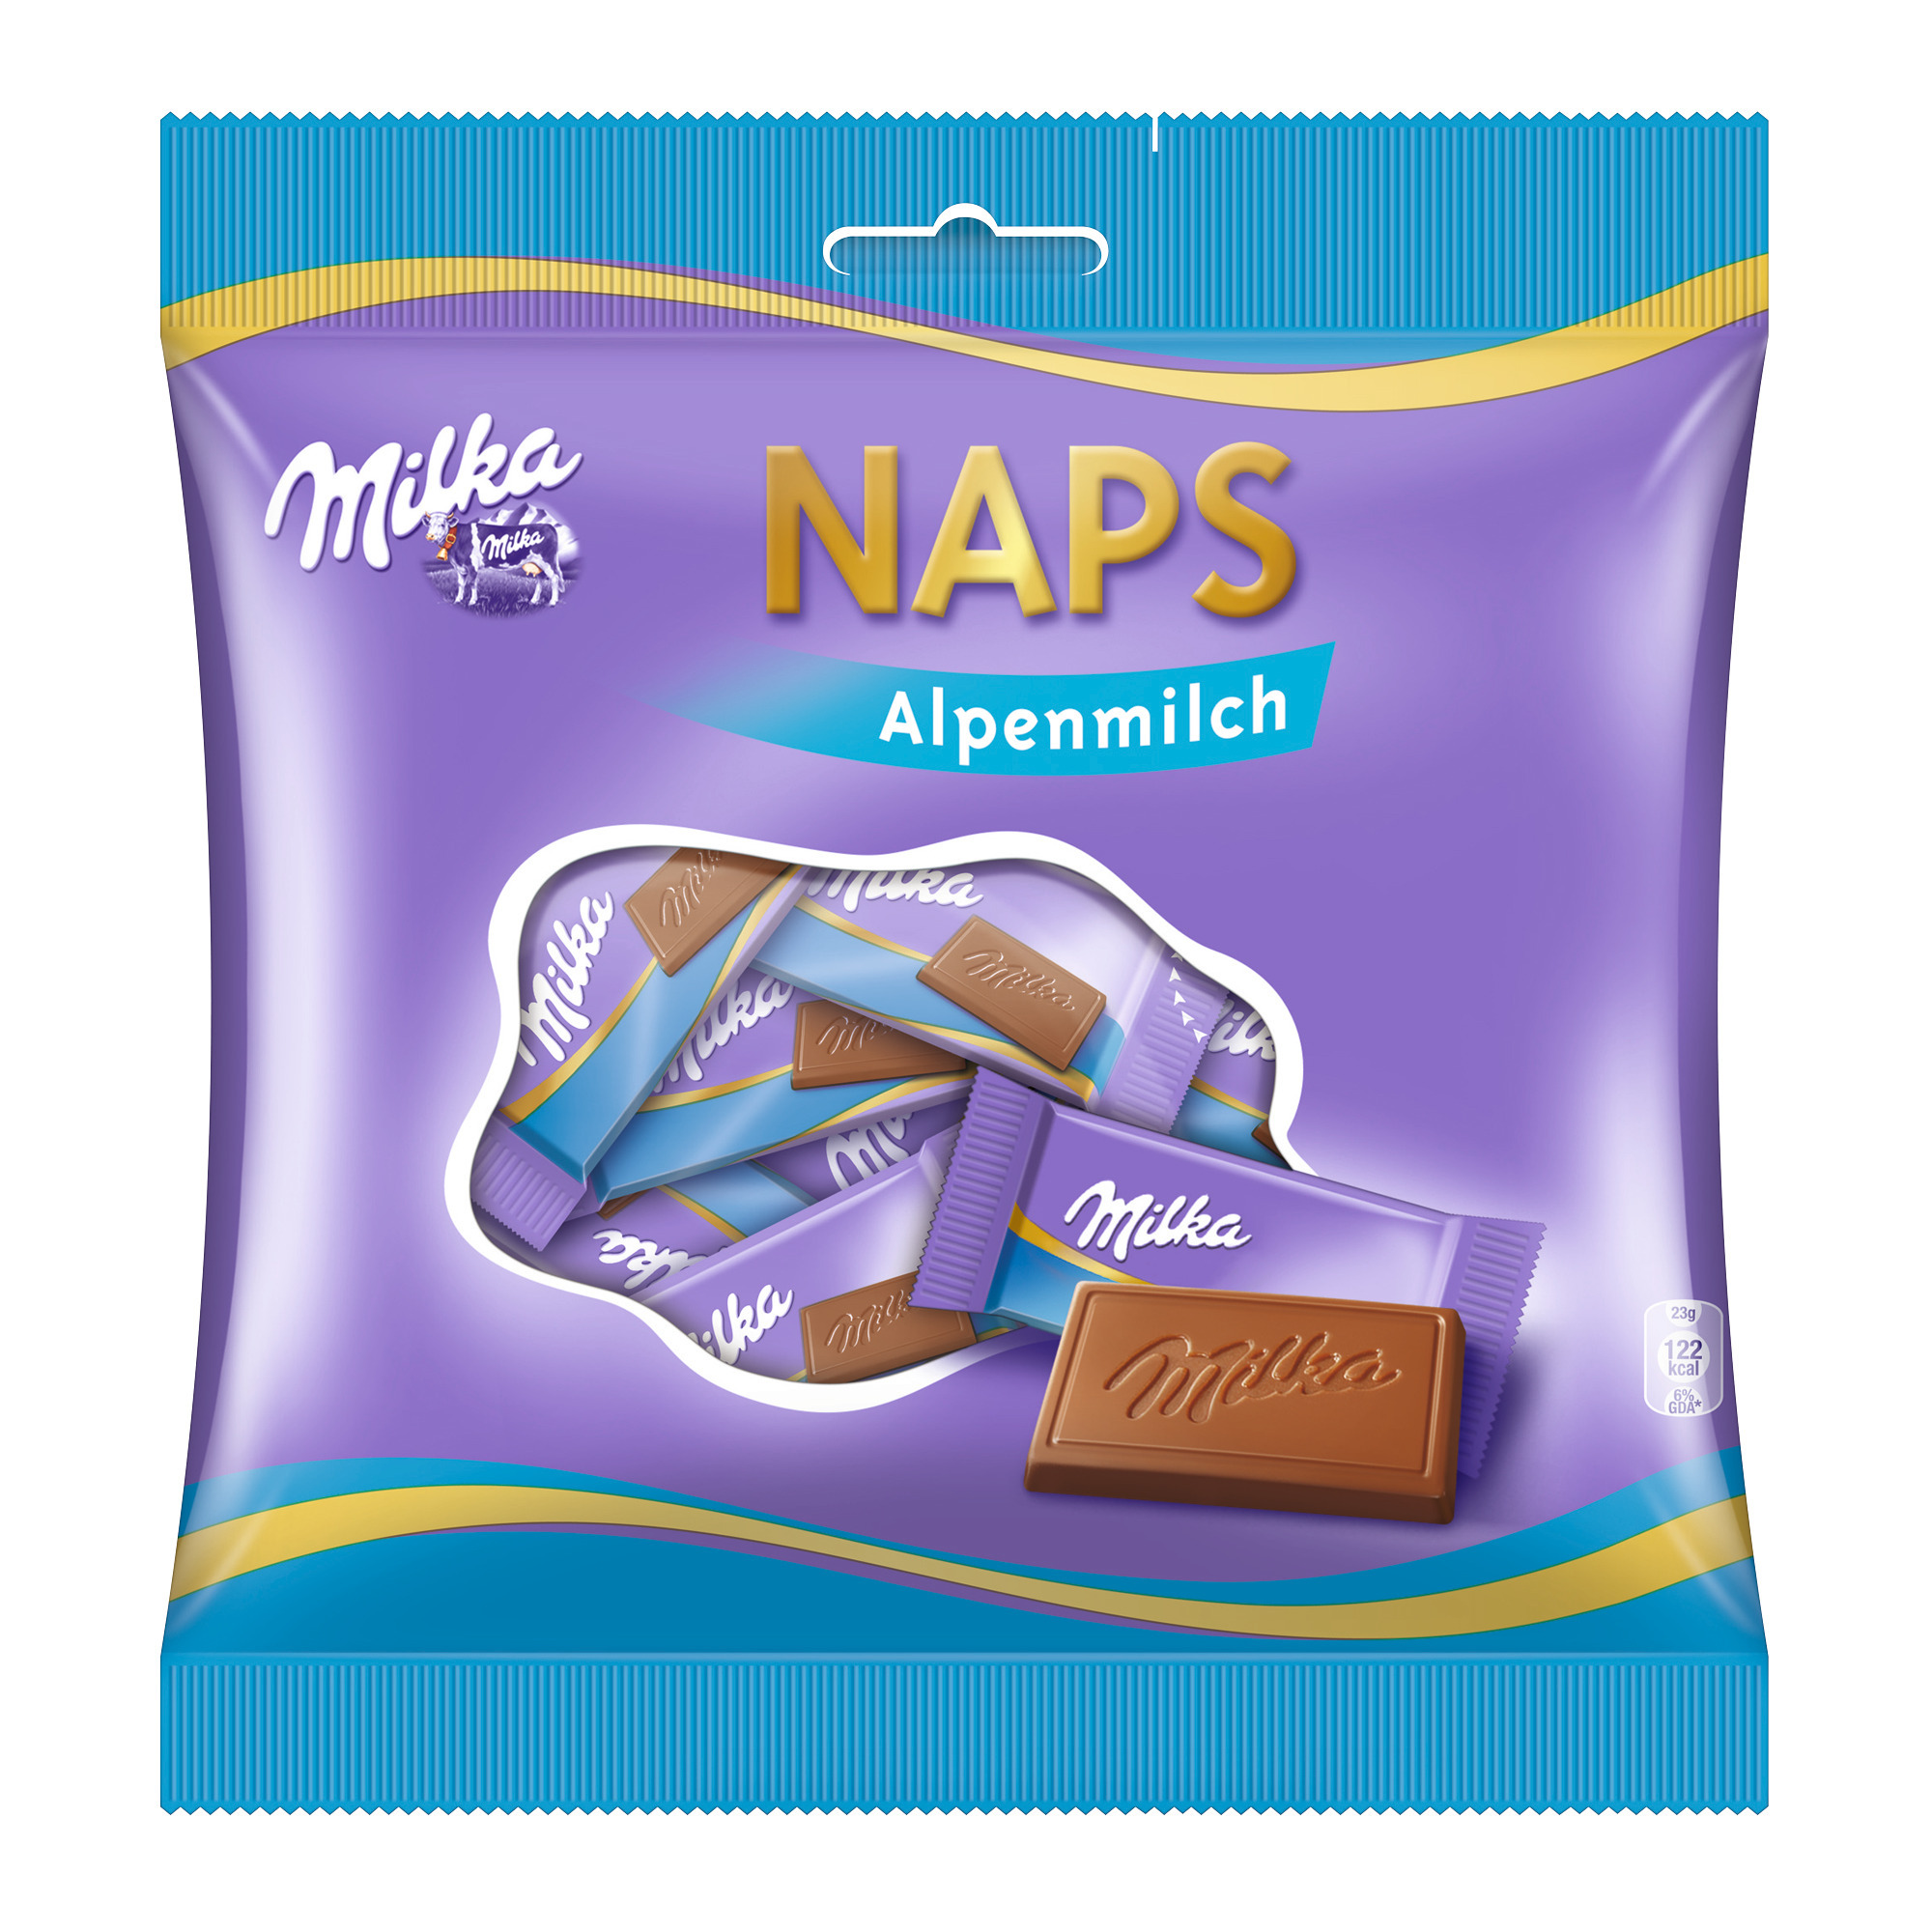 Milka Naps vrecko 119g, Alpenmilch